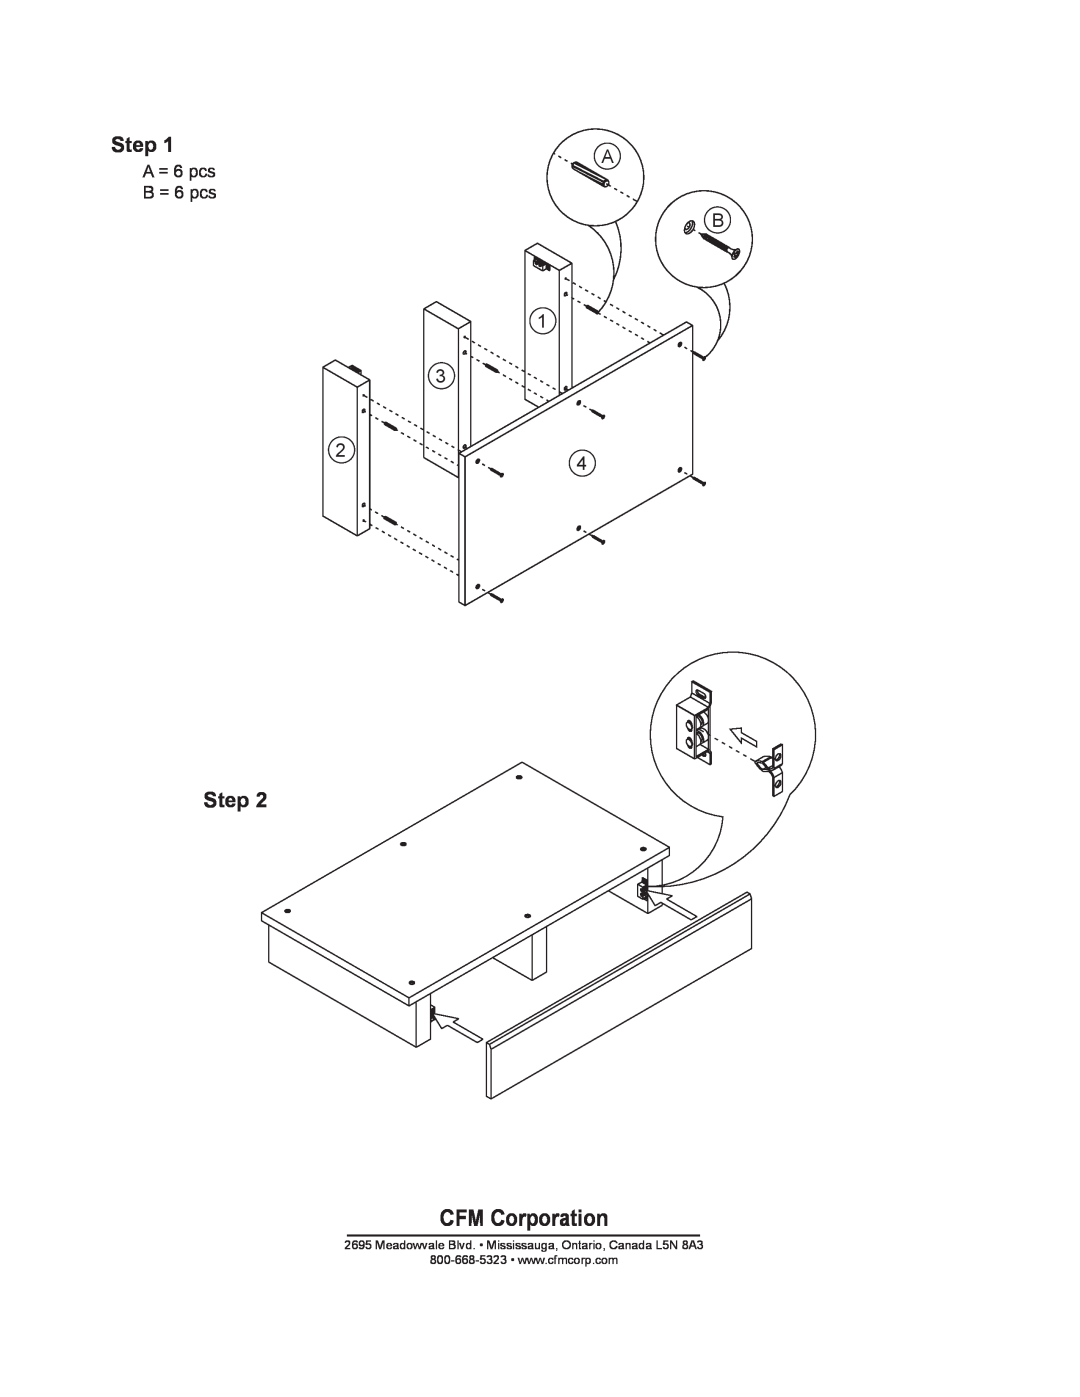 Majestic Appliances Indoor Fireplace installation instructions Step, CFM Corporation, A B, A = 6 pcs B = 6 pcs 